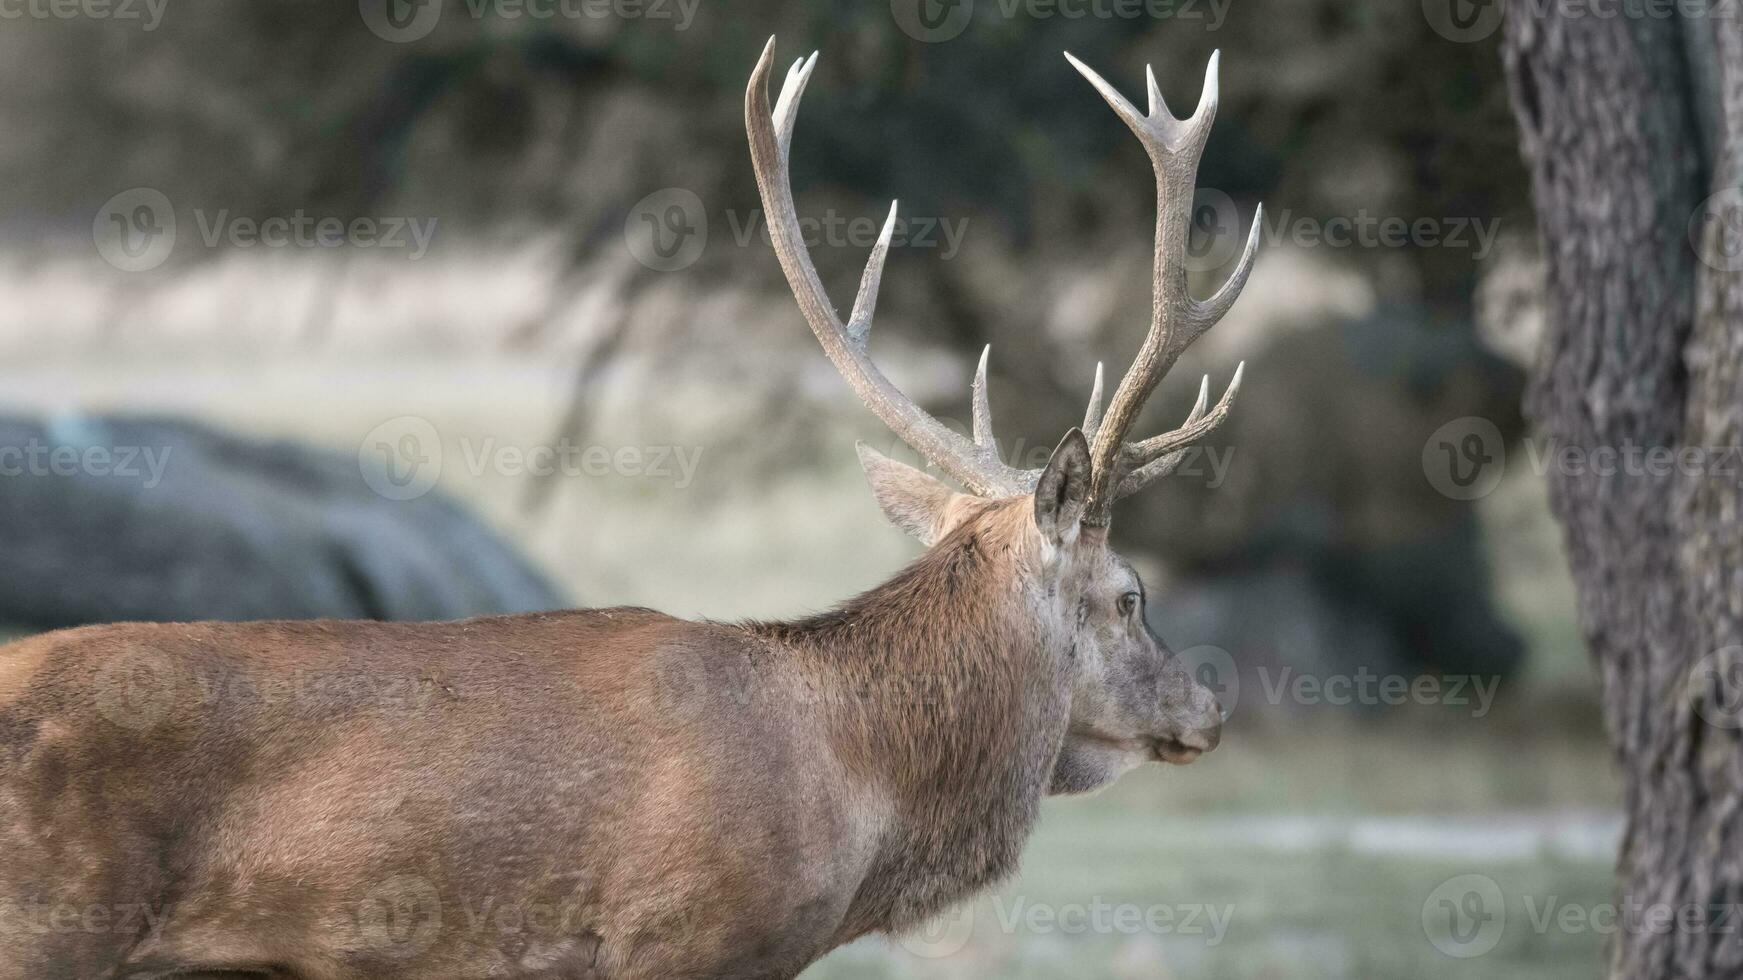 Red deer rut season, La Pampa, Argentina photo